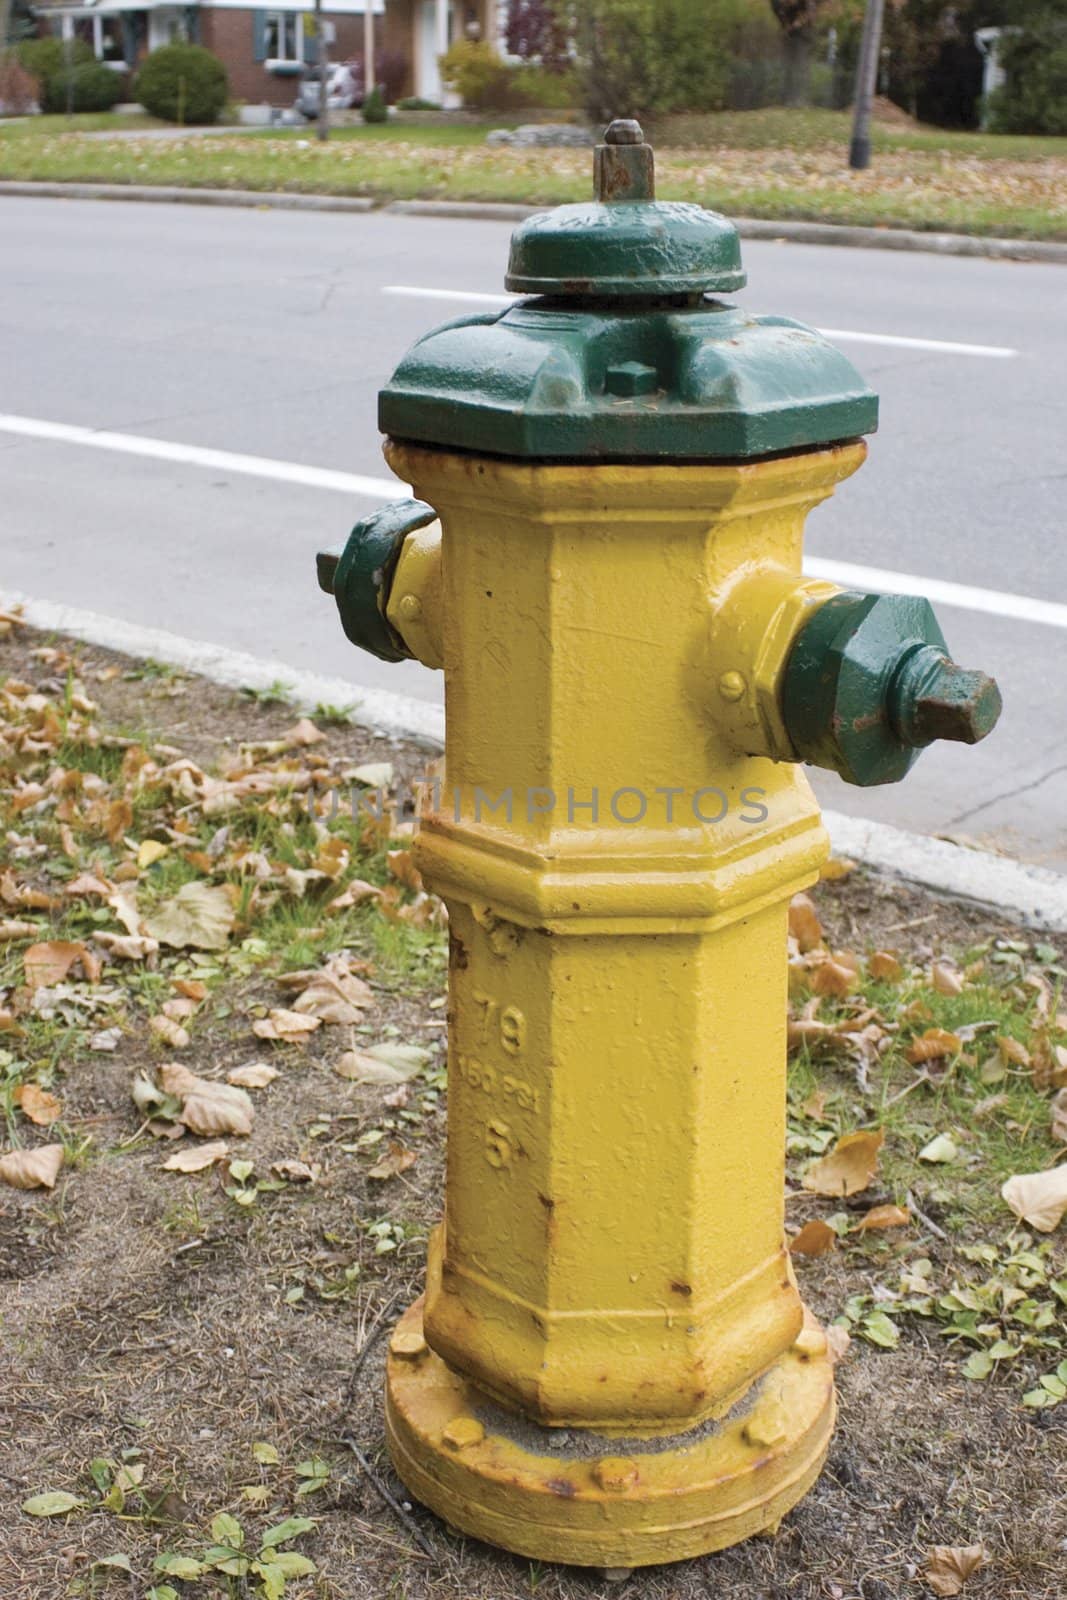 Fire hydrant by mypstudio